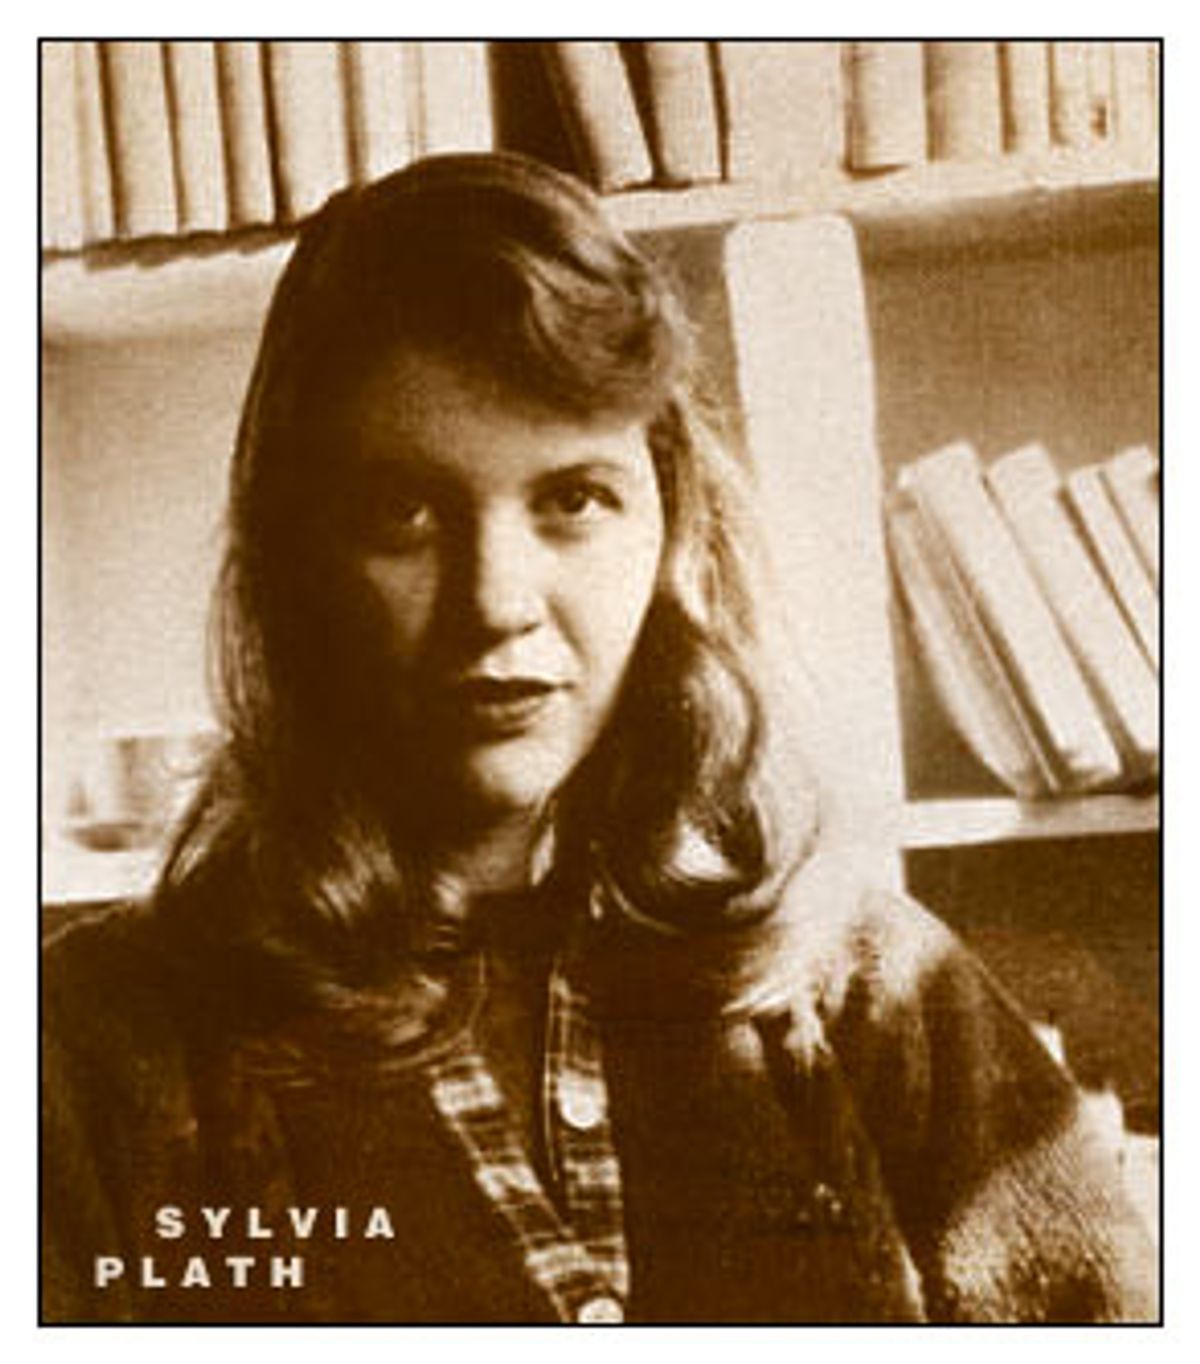 The real Sylvia Plath